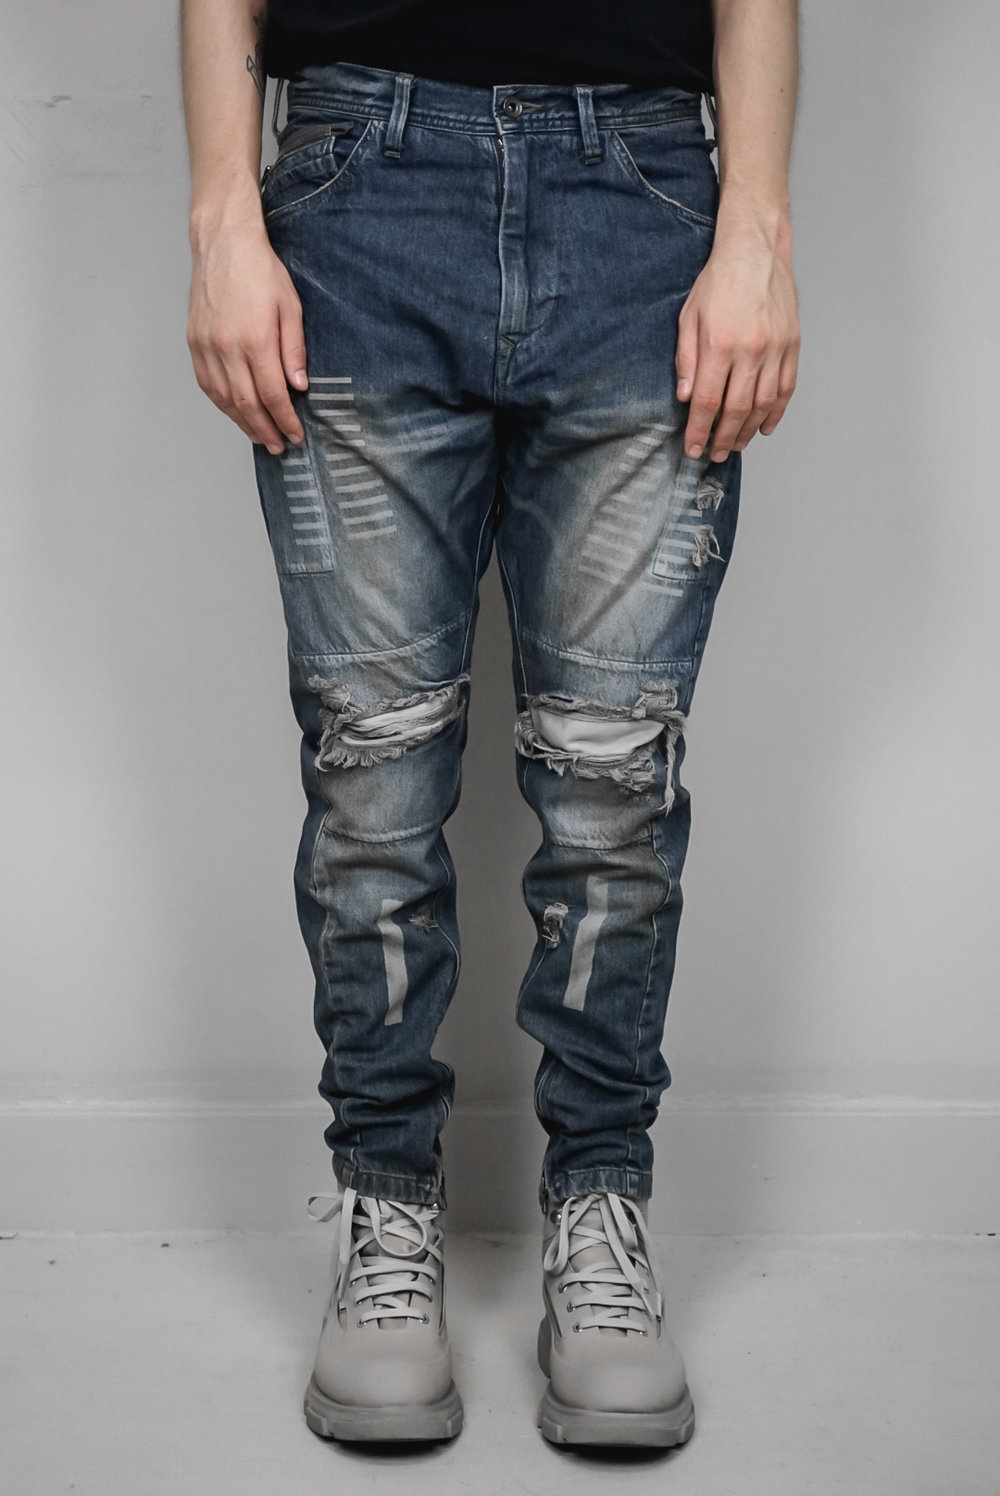 Julius – Mens – Skinny Jeans – Blue / Indigo – Cotton – Ripped & Bleached Details – Regular Length – Button & Zip Fastening